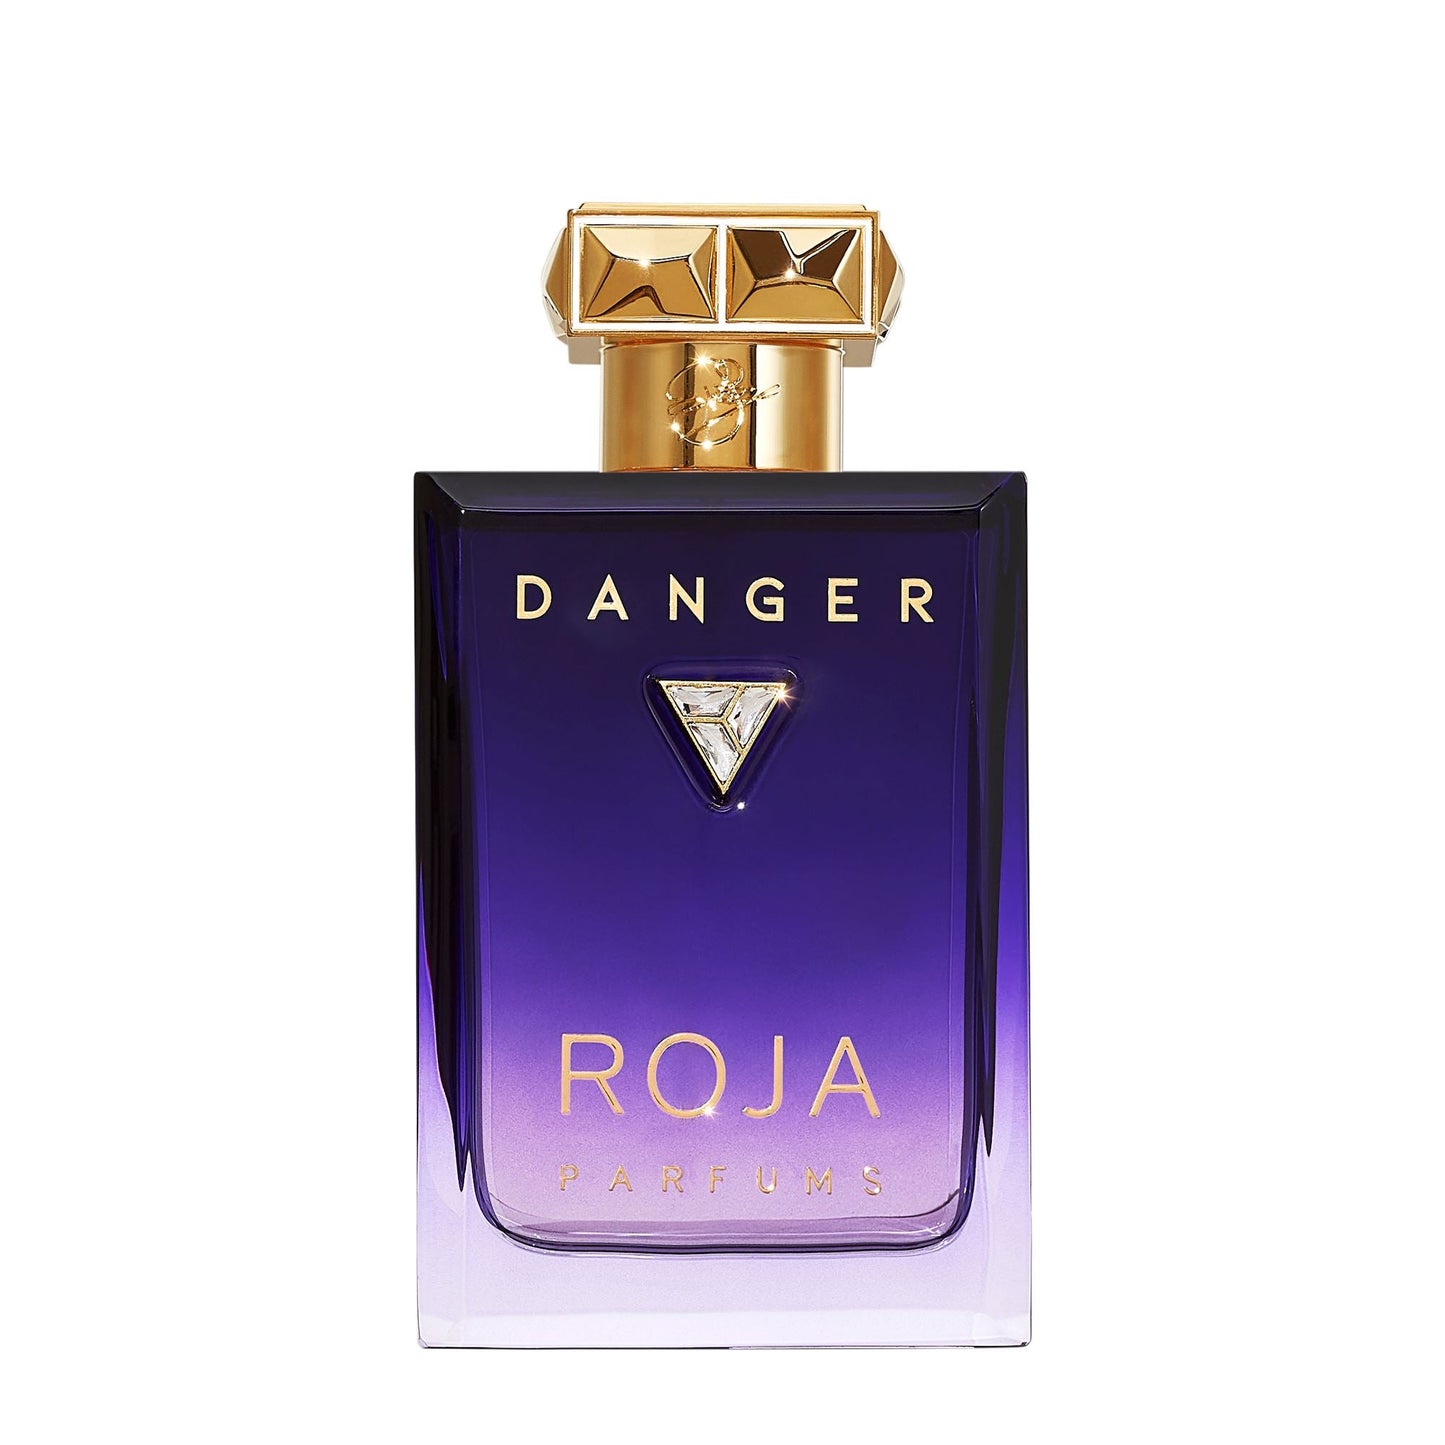 Roja - Danger Essence de Parfum